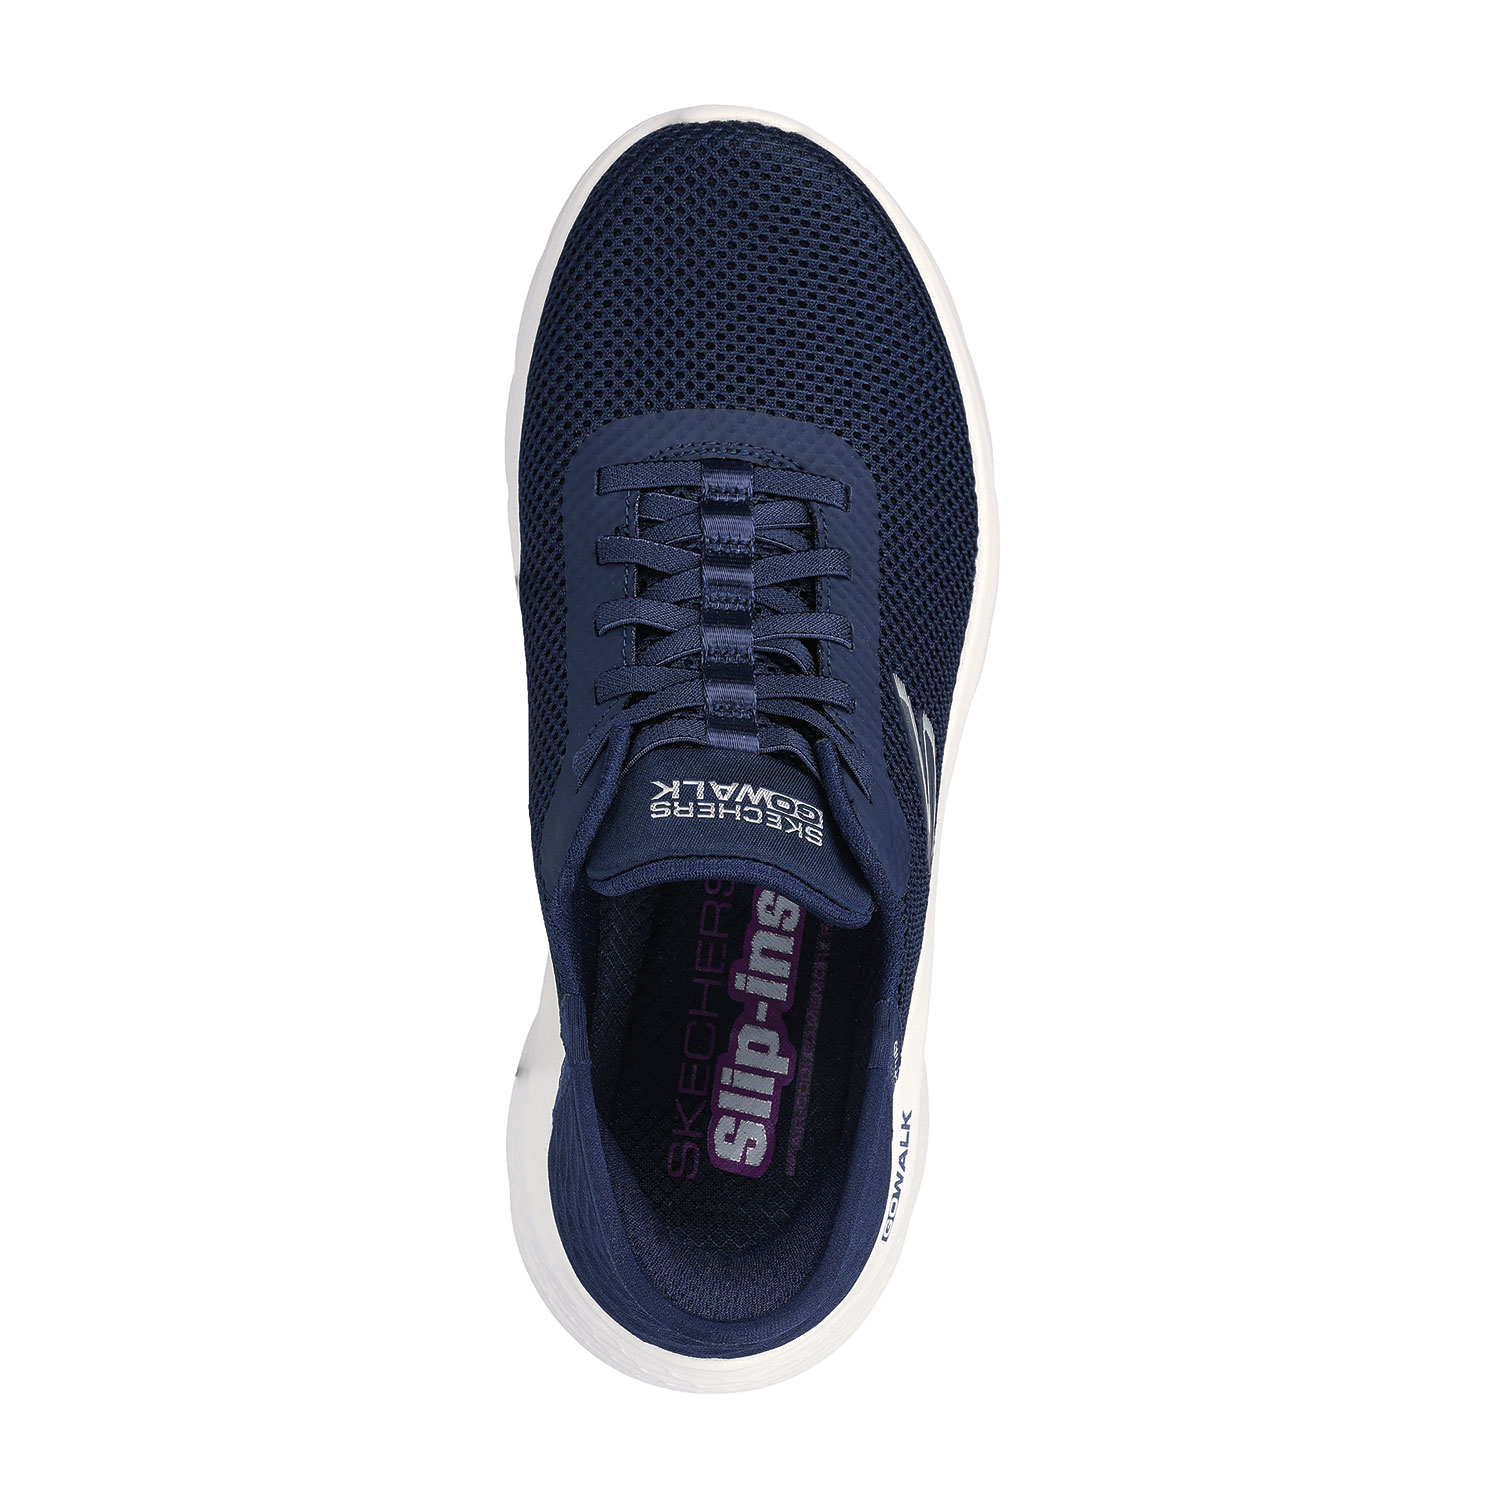 Product image for Skechers Hands Free Slip-ins GO WALK Flex